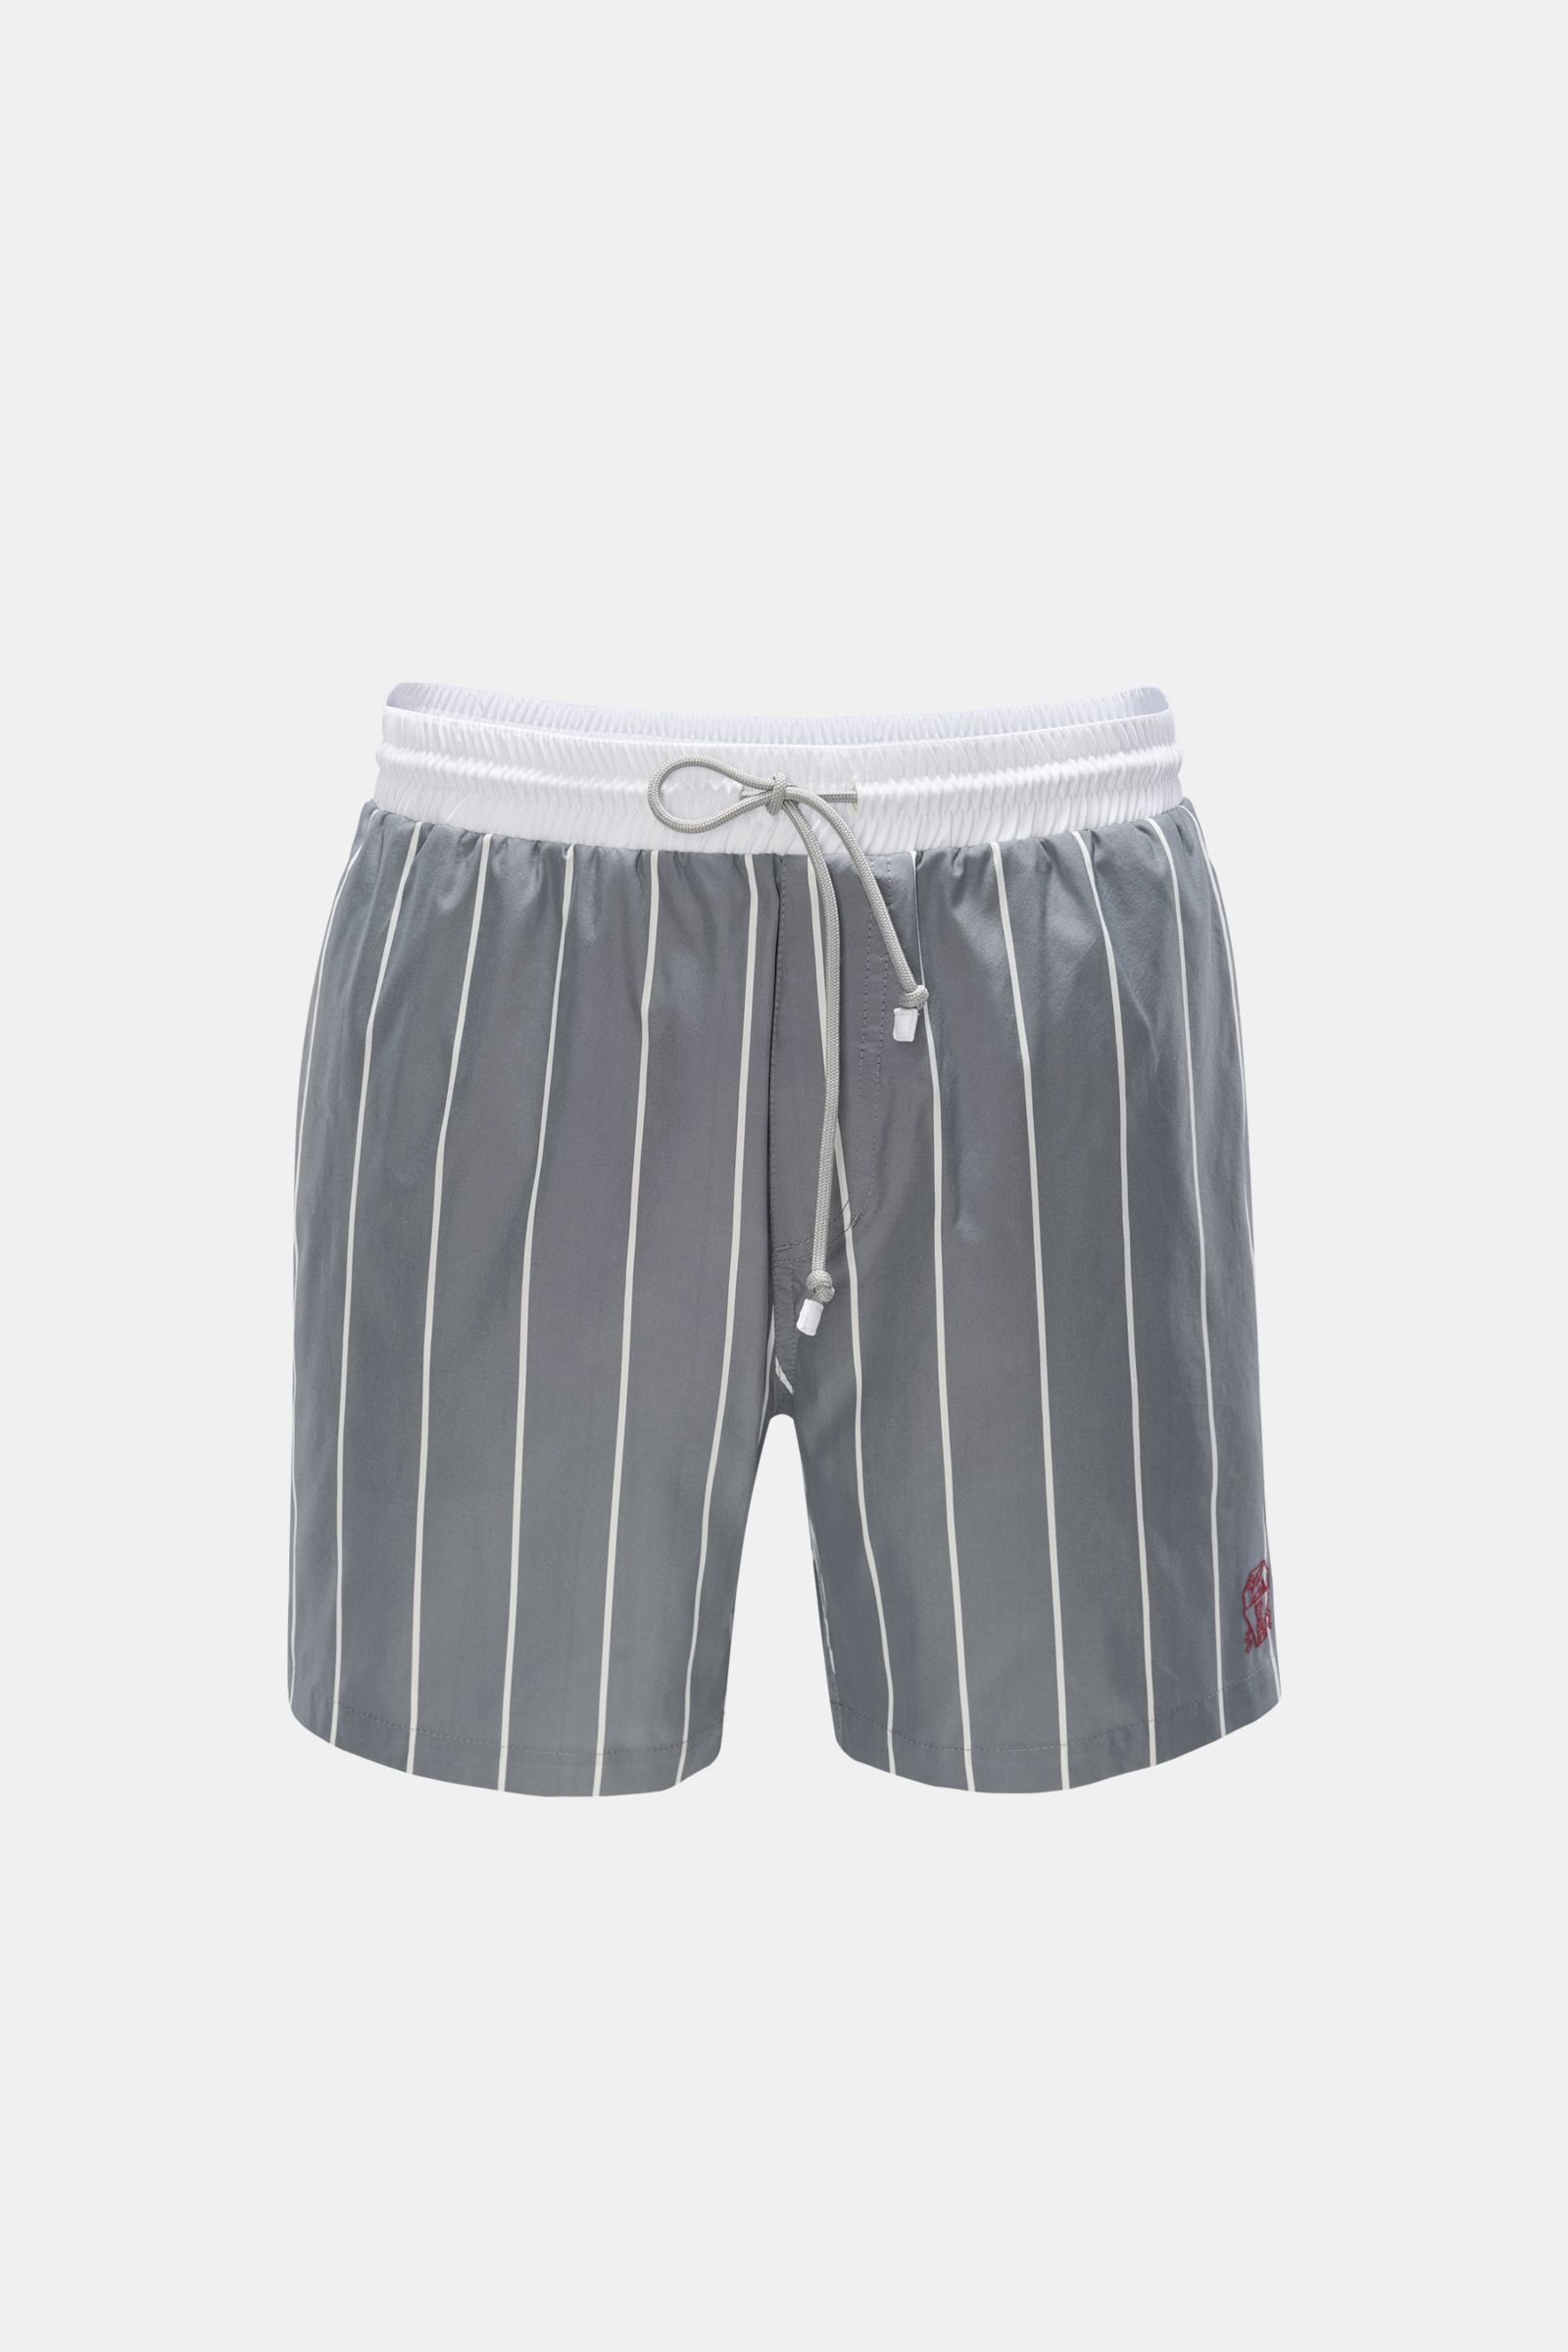 Swim shorts grey striped